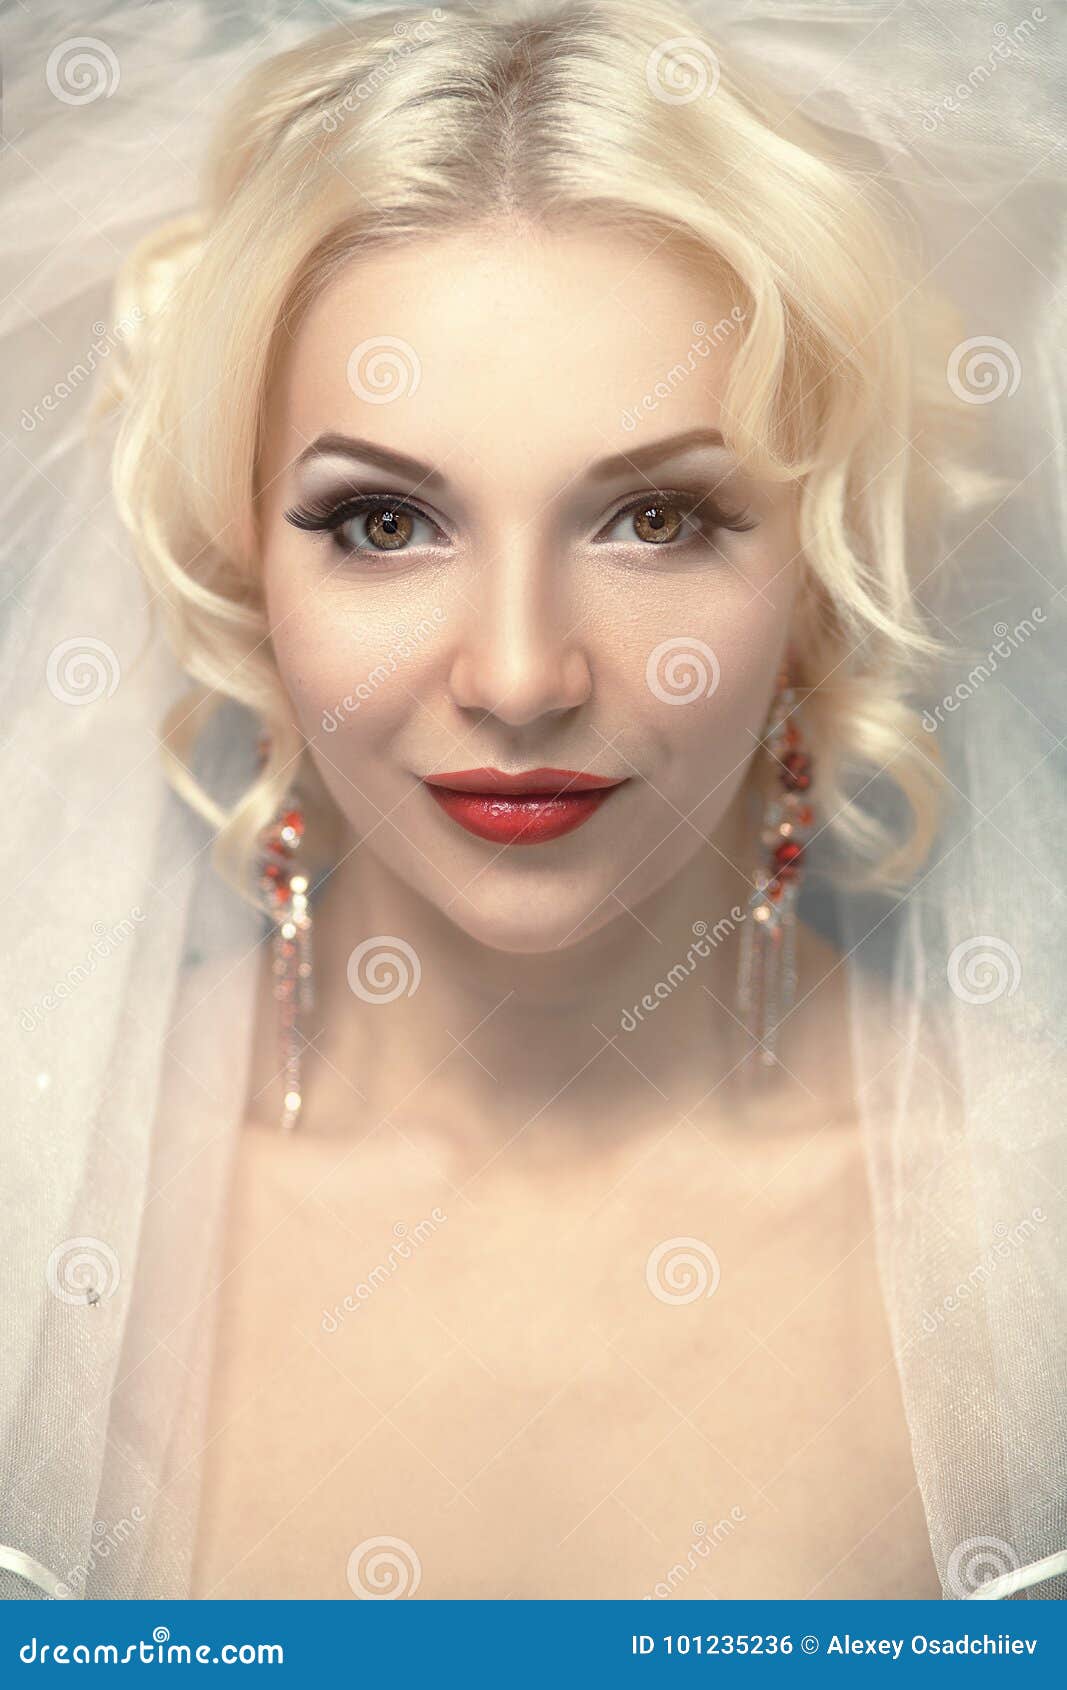 Perfect Blonde Bride Dreams Desire Stock Photo - Image of girl, golden ...